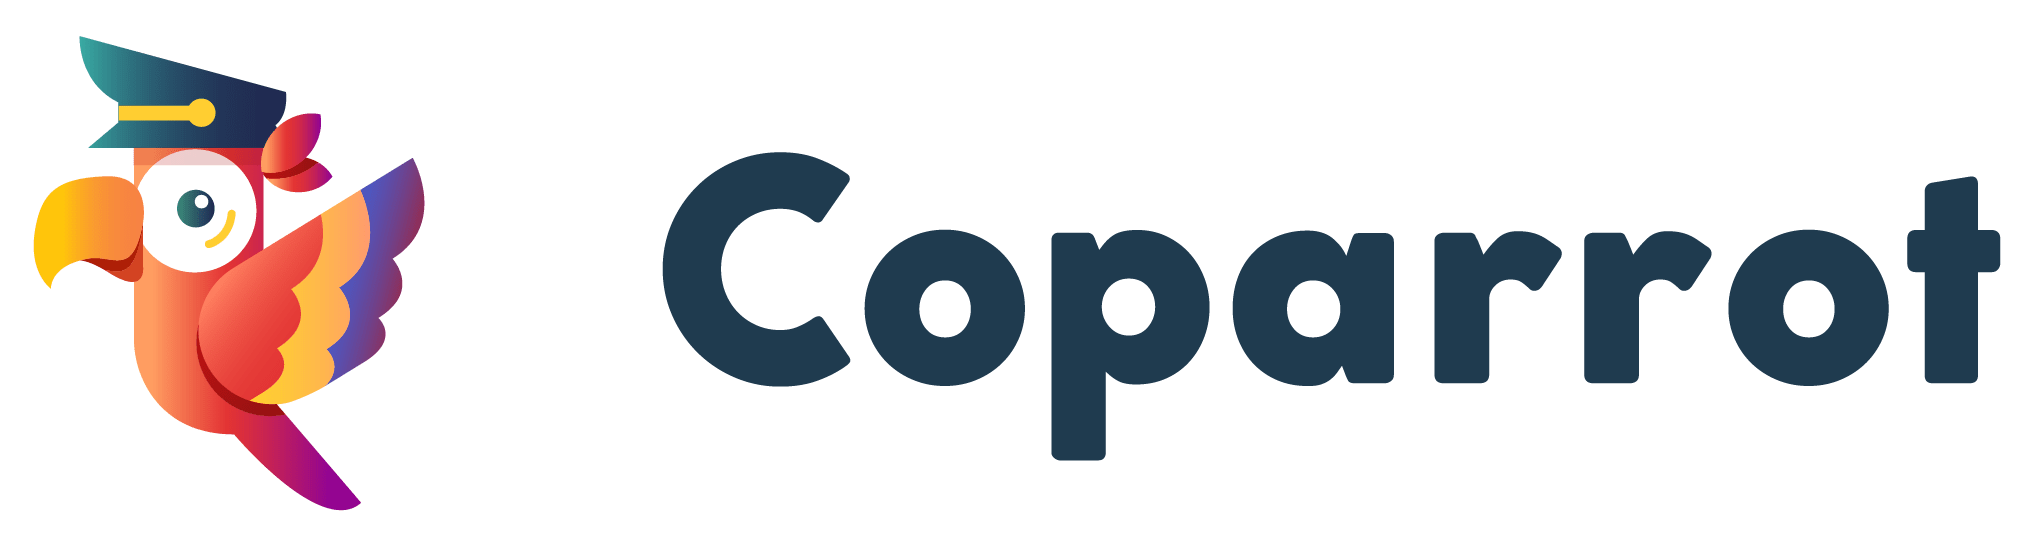 Coparrot Logo